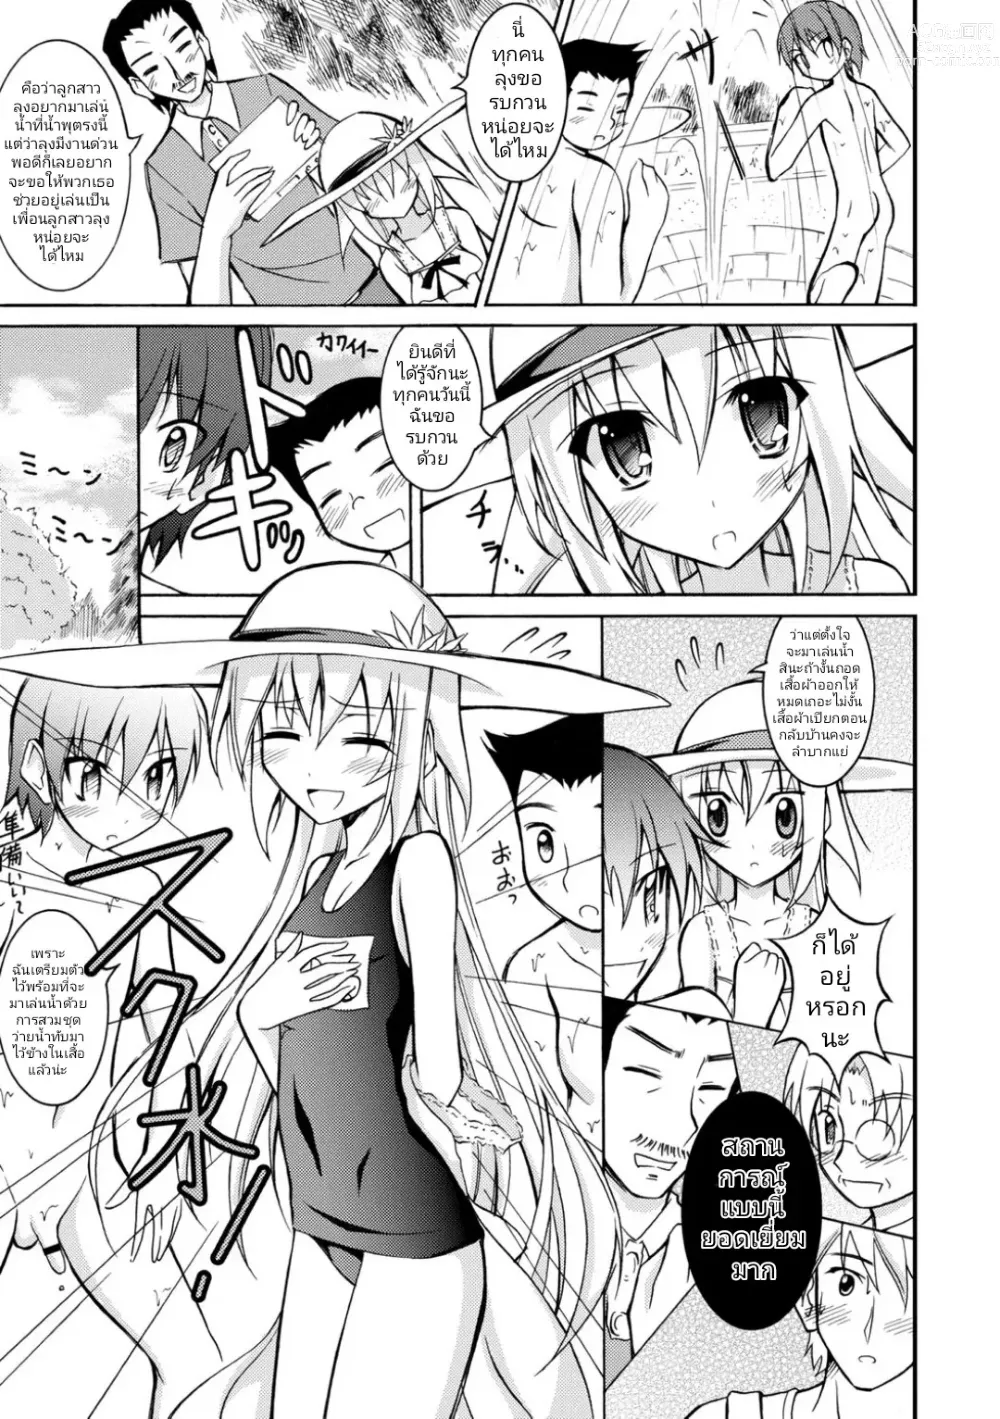 Page 5 of manga การละเล่นเปิดตัวที่สวนสาธารณะ